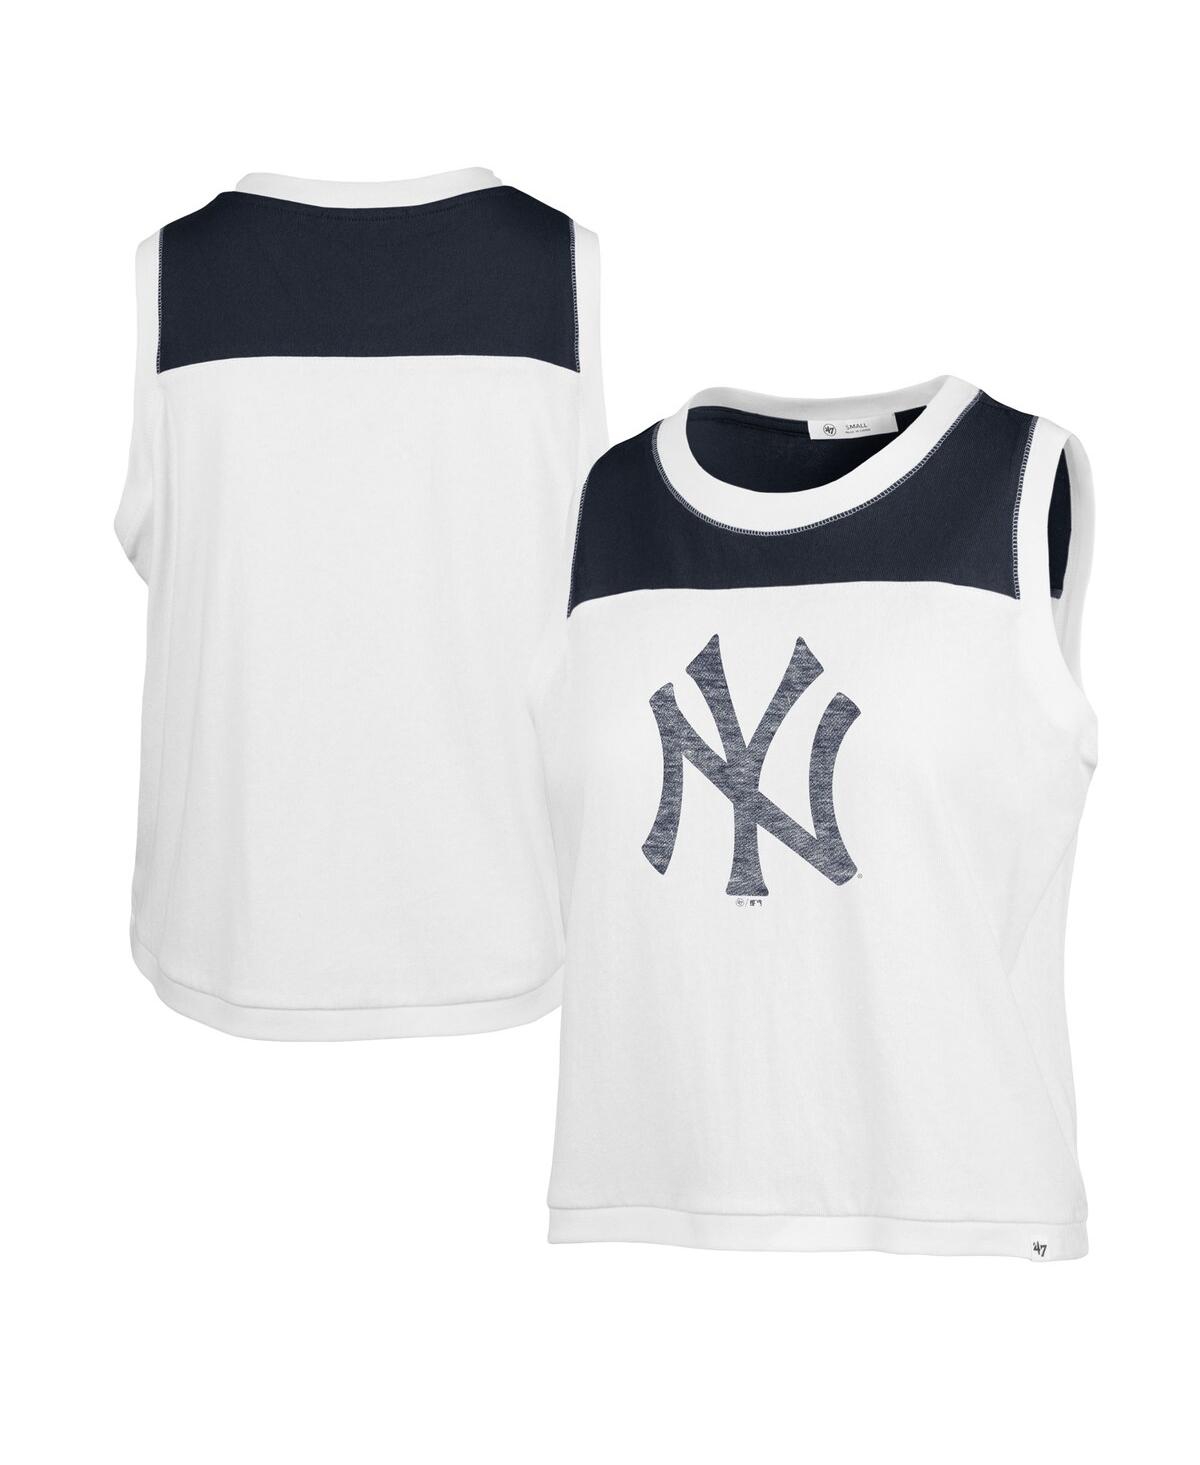 Women's '47 Brand White Distressed New York Yankees Premier Zoey Waist Length Tank Top - White